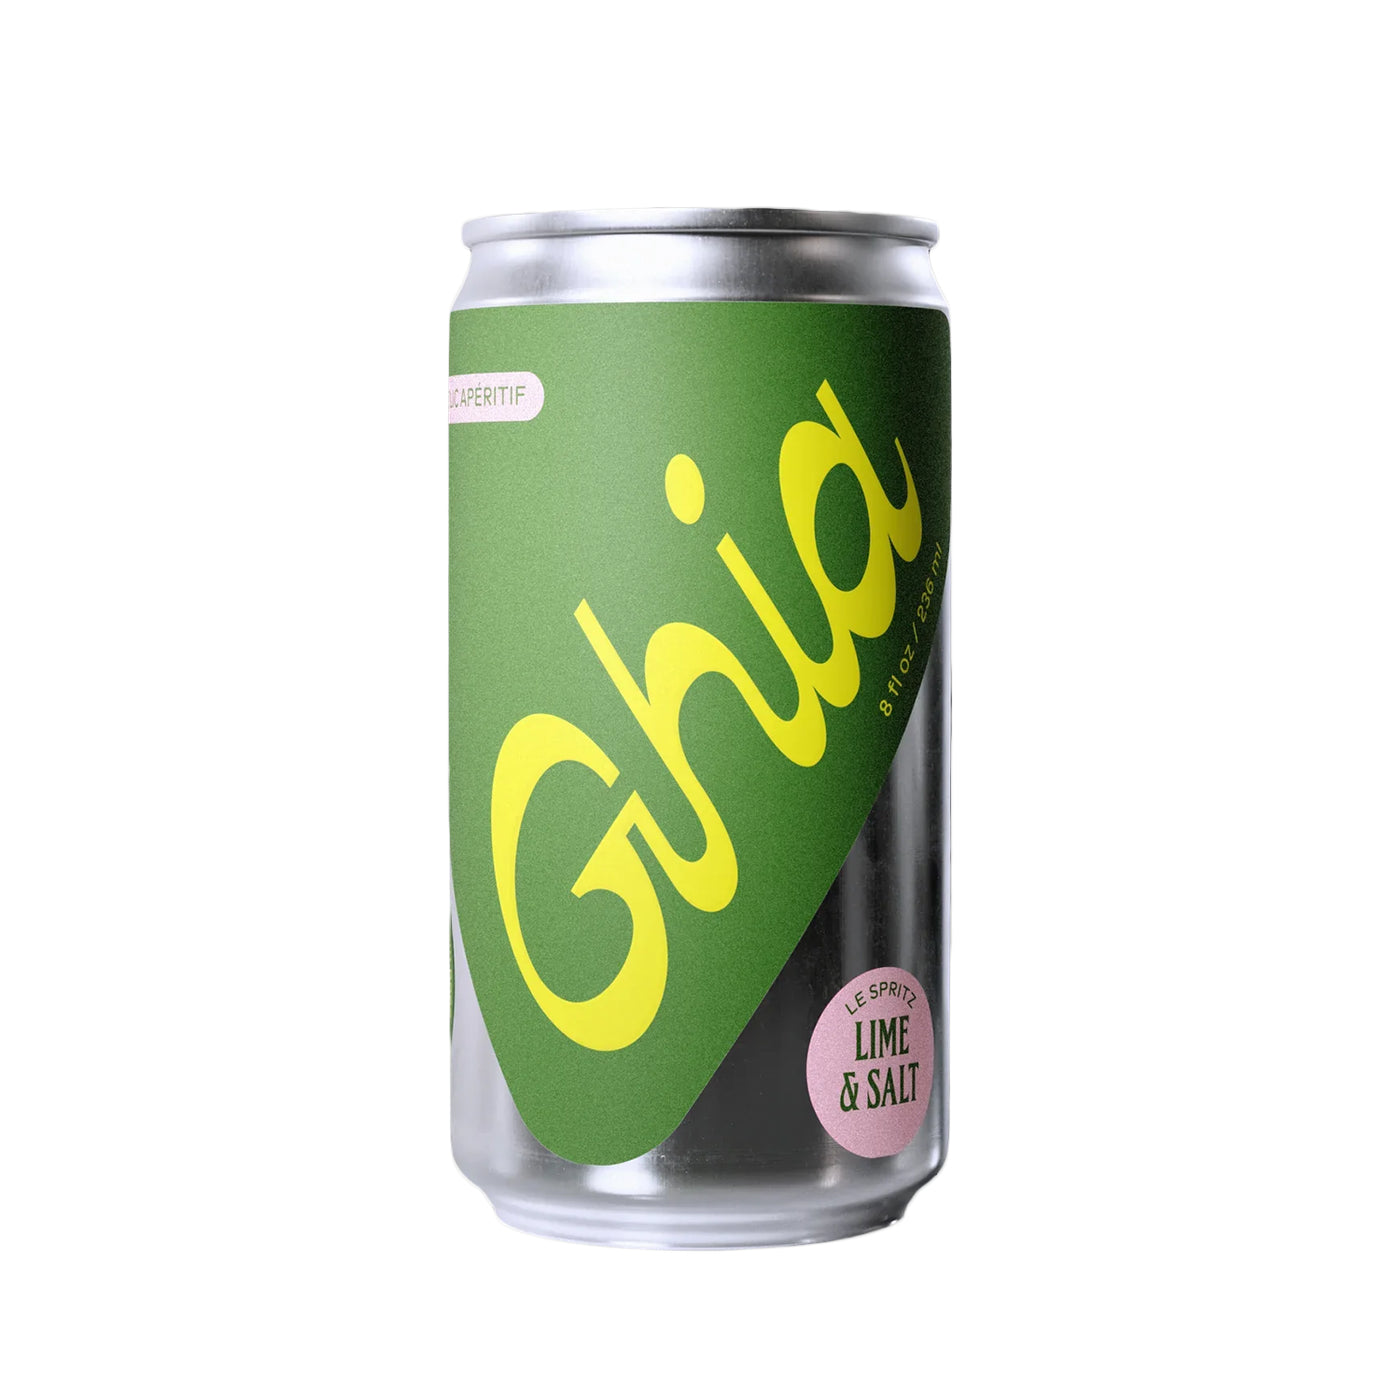 Ghia lime & salt Non-alcoholic cocktail